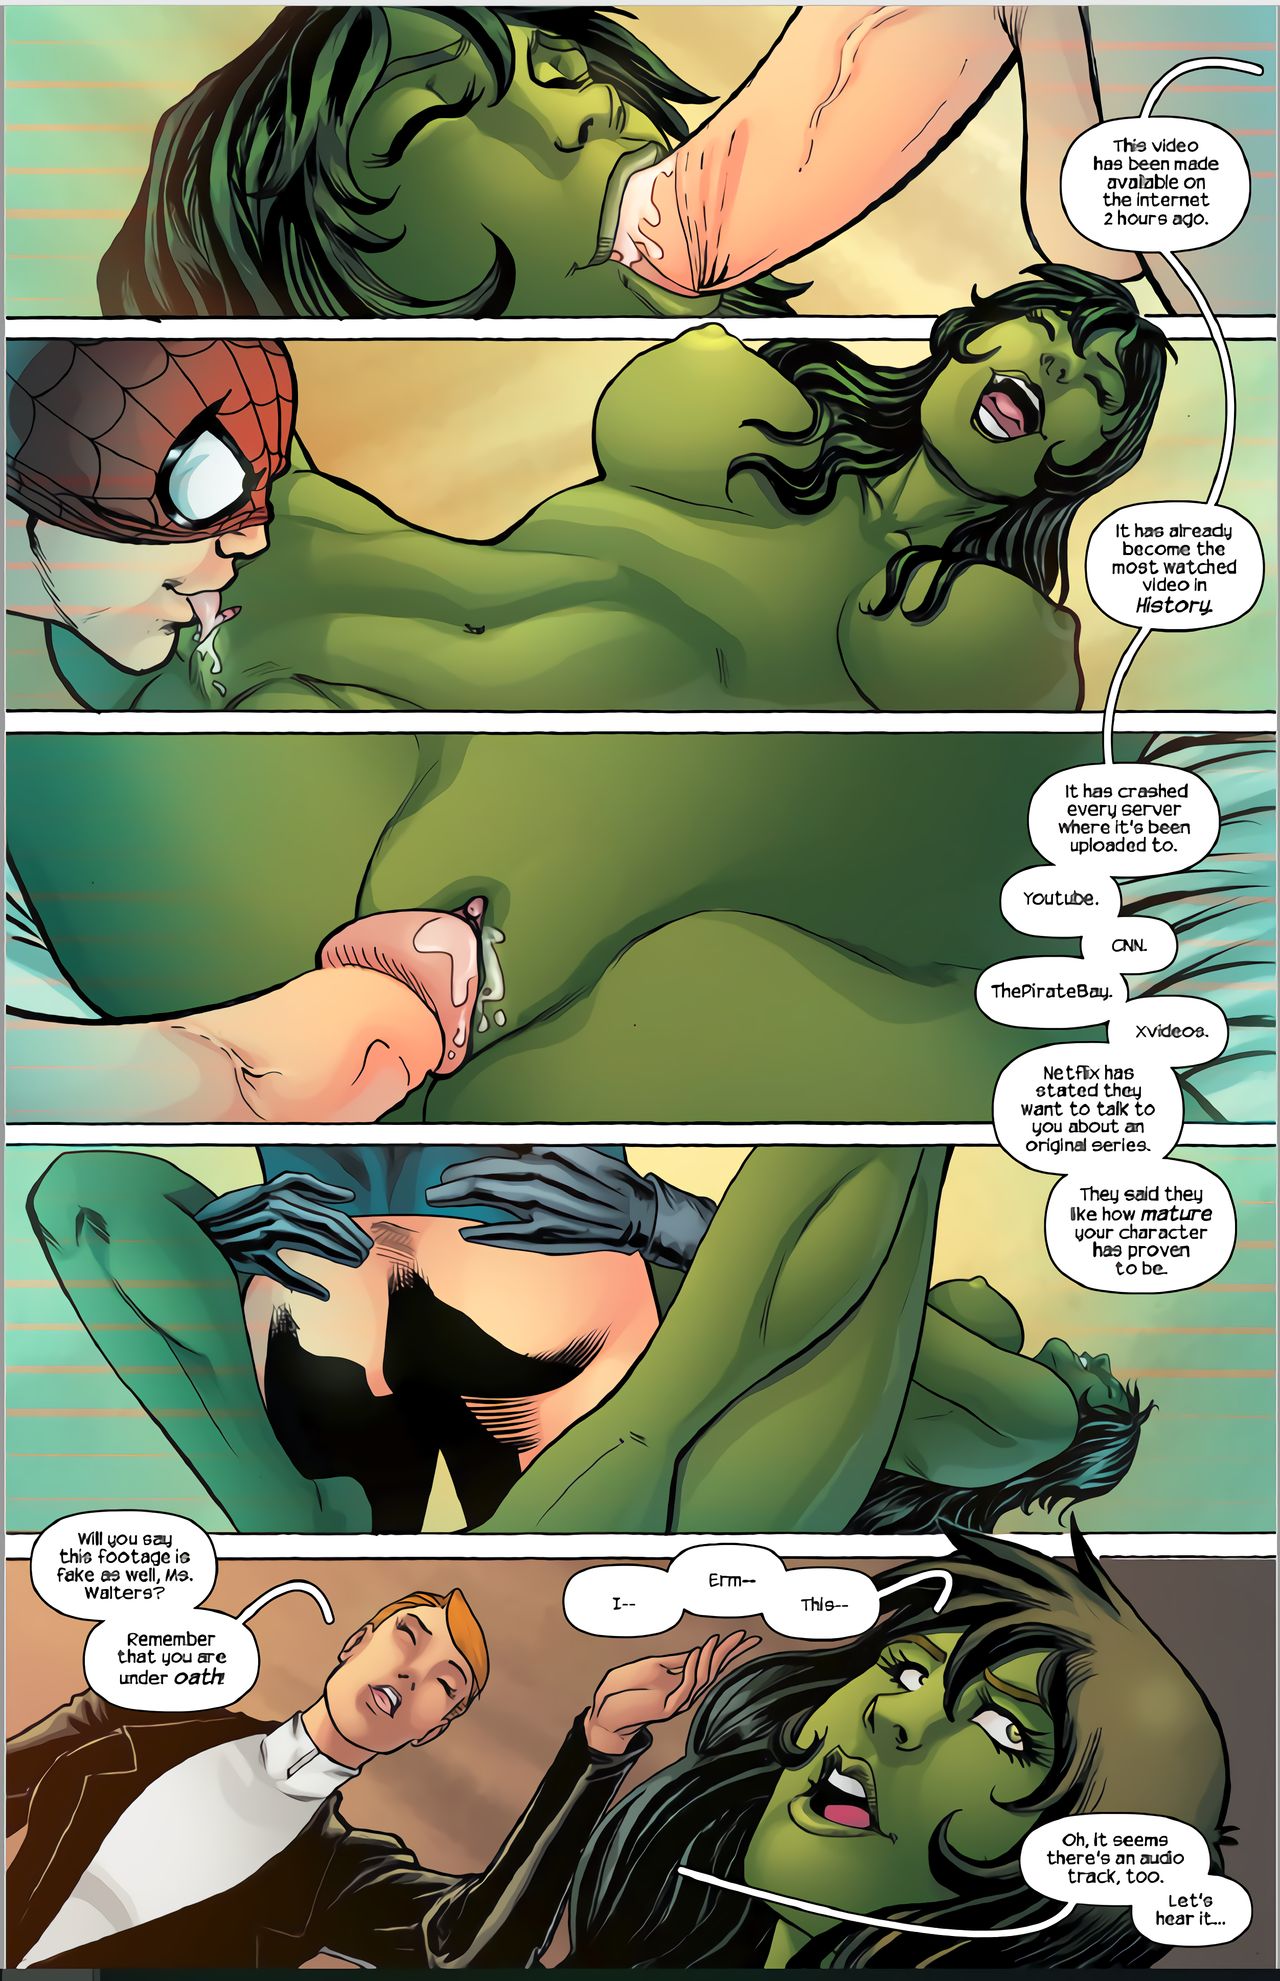 She-Hulk by Rllas (Tracy scops) â€¢ Free Porn Comics